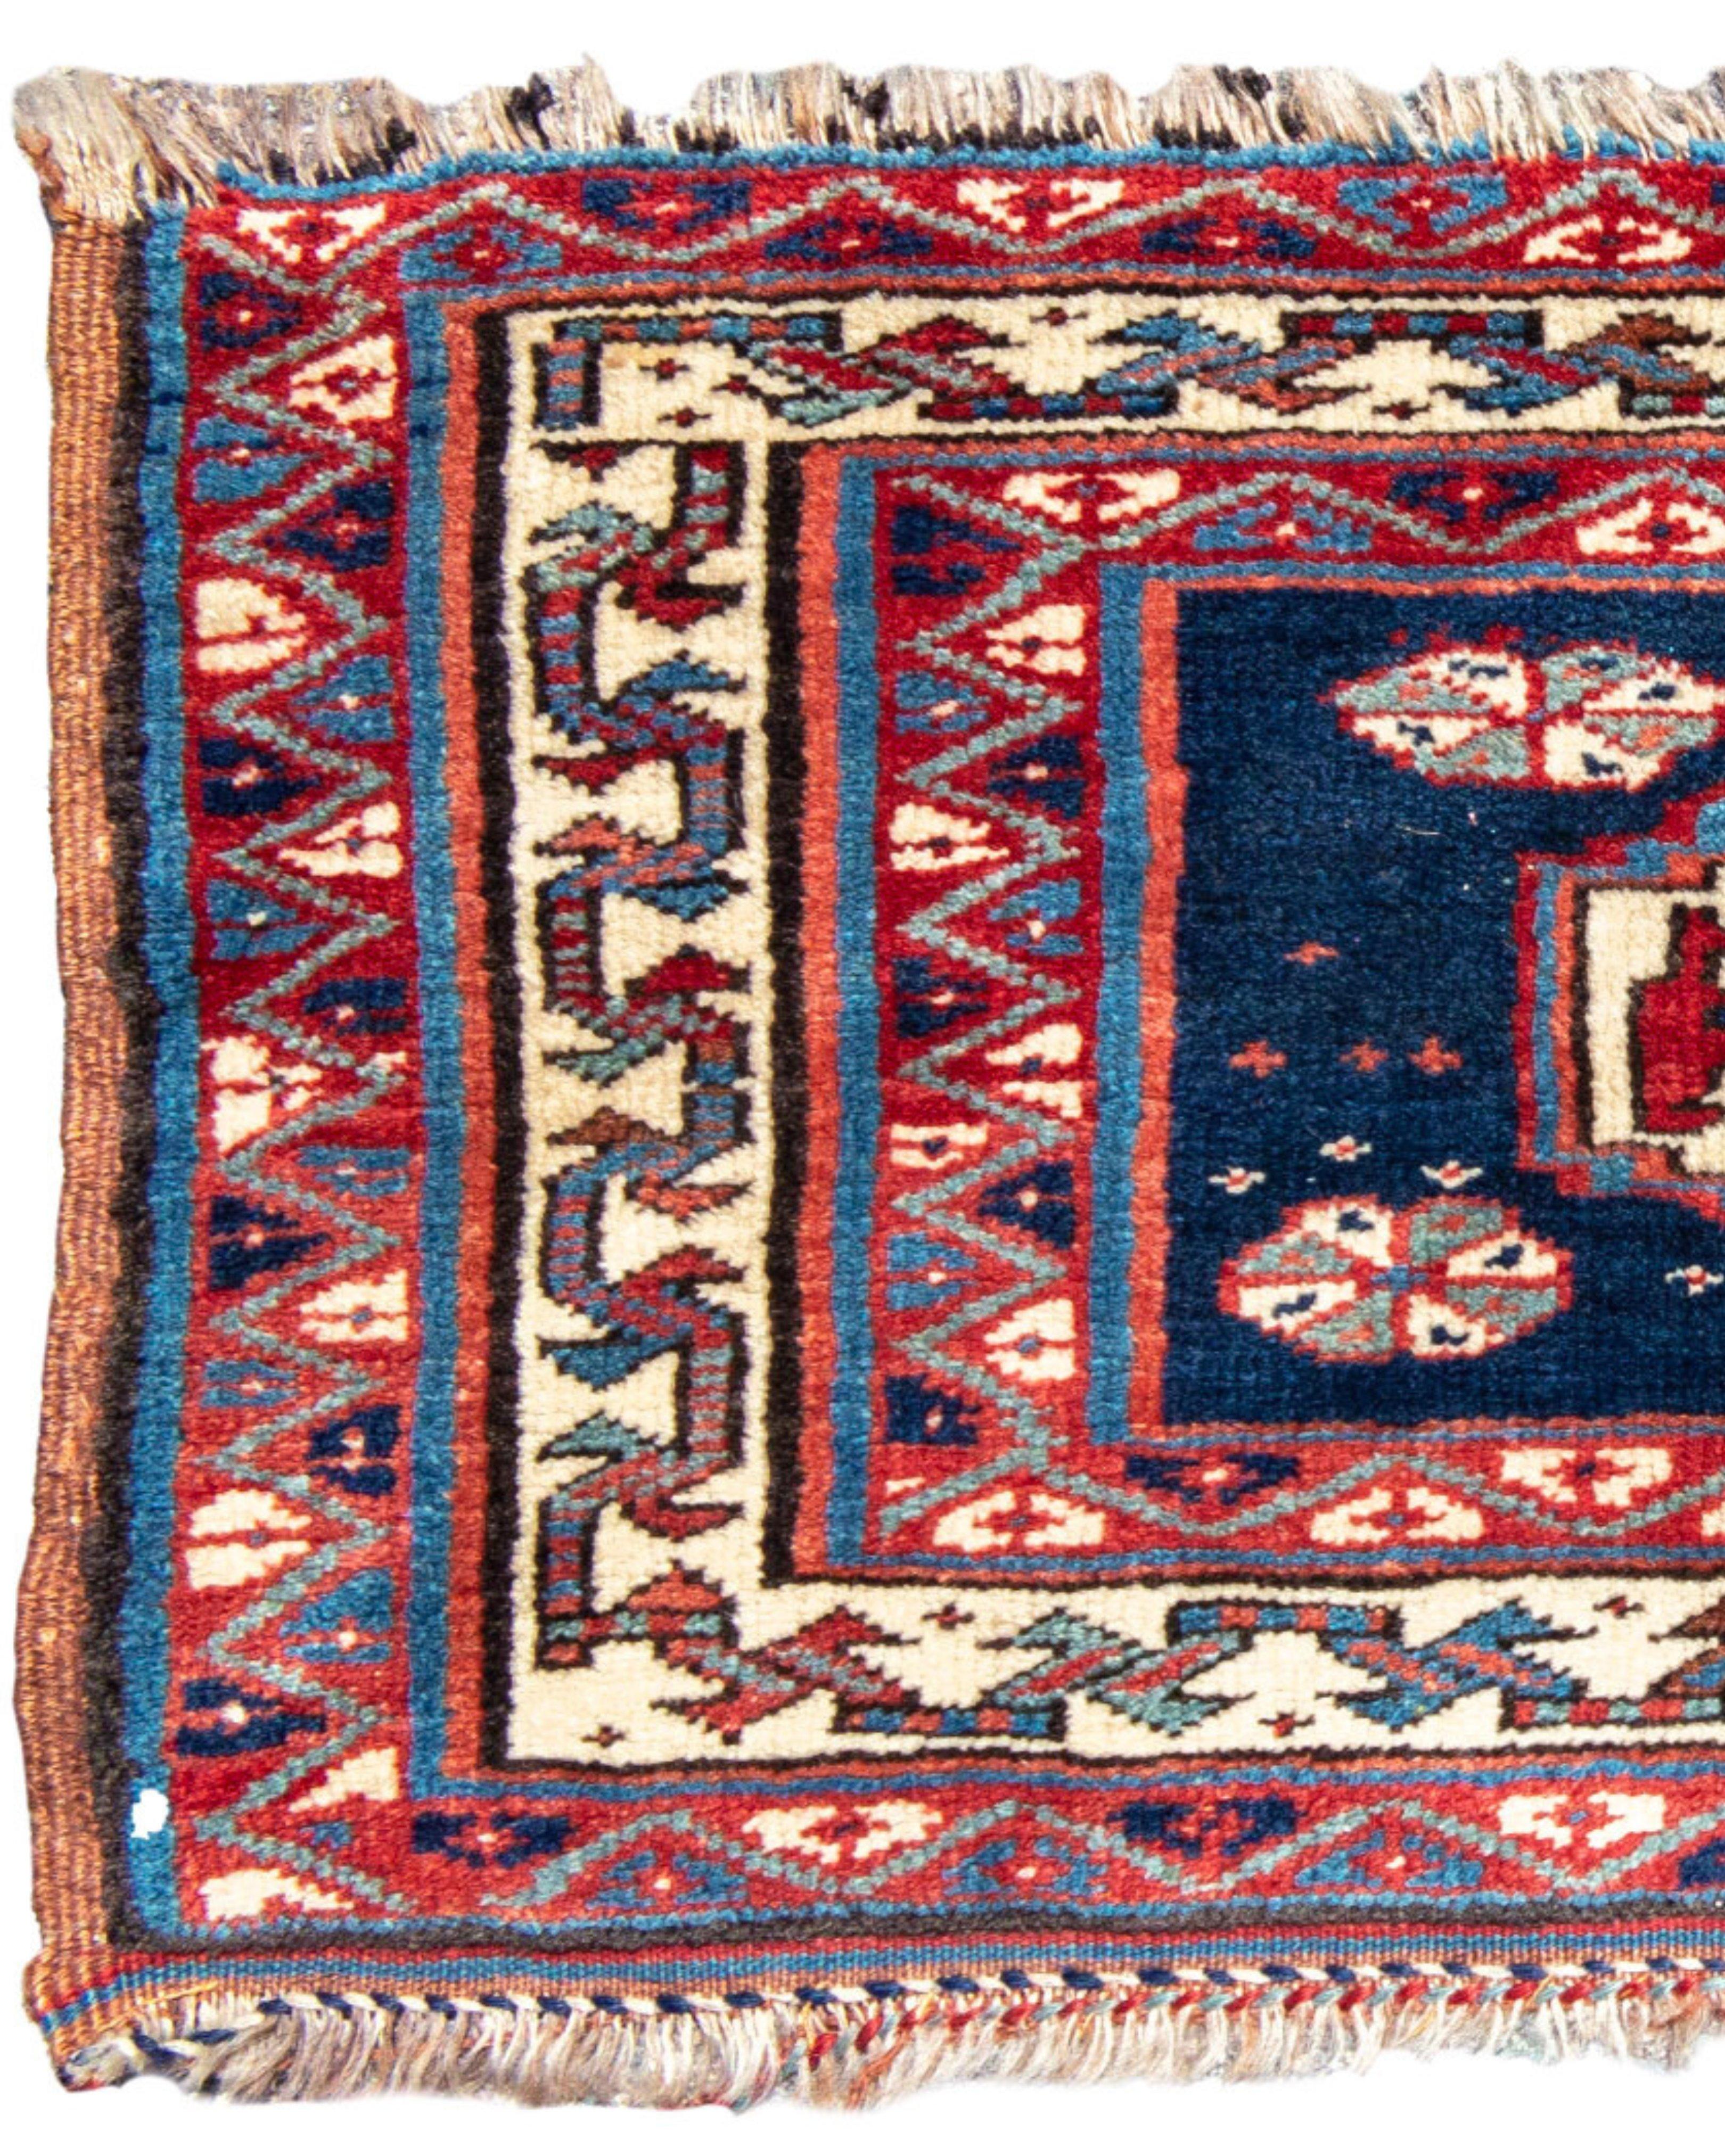 Antique Persian Veramin Torba Rug, 19th Century

Additional Information:
Dimensions: 1'3